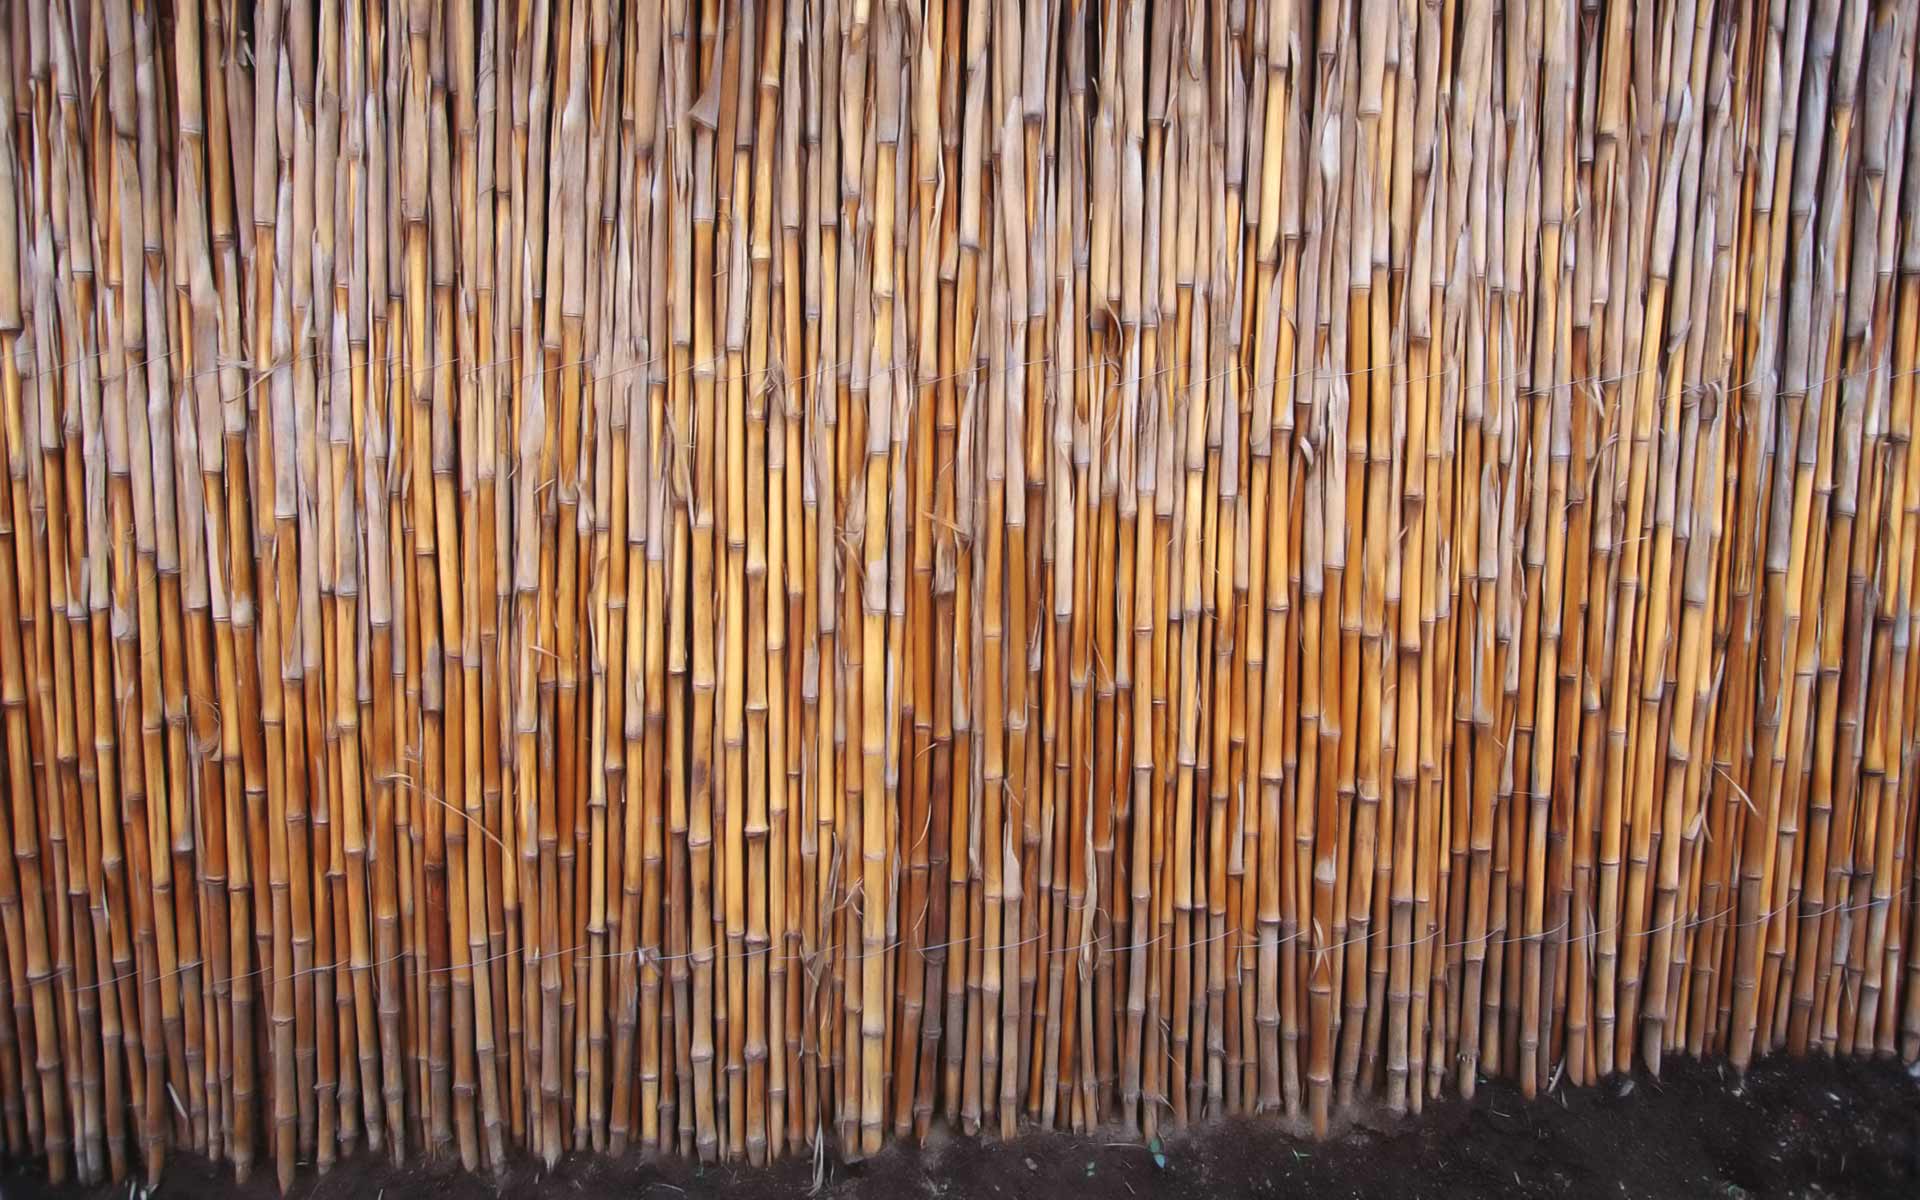 Desktop Wallpaper · Gallery · Nature · Bamboo fence. Free